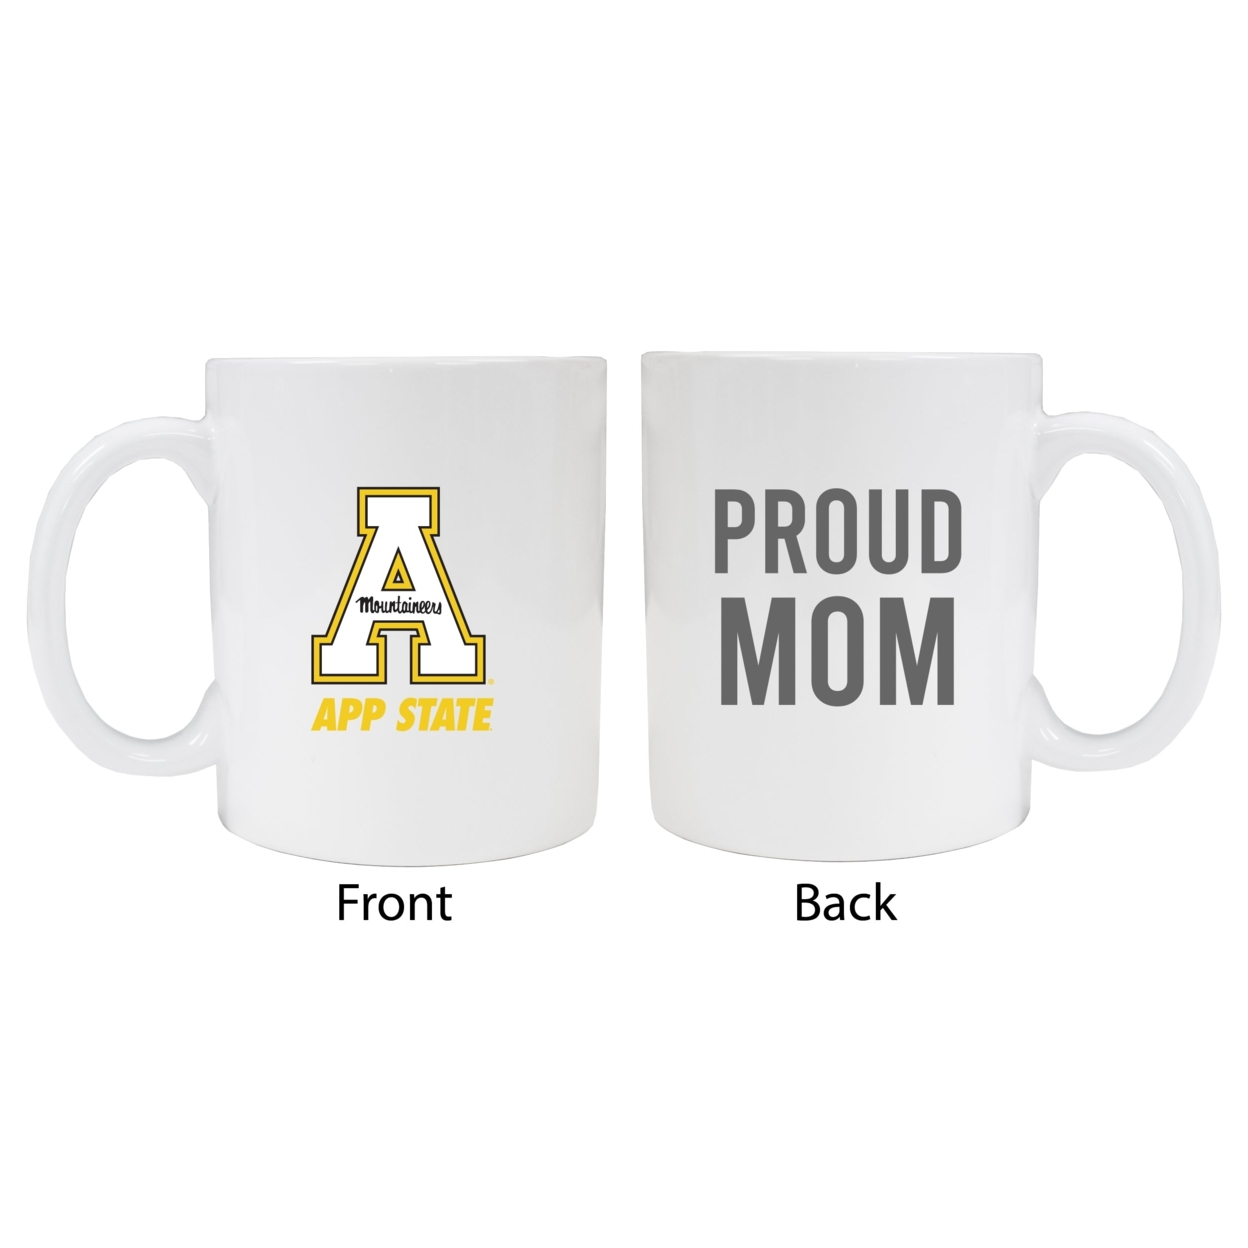 Appalachian State Proud Mom Ceramic Coffee Mug - White (2 Pack)